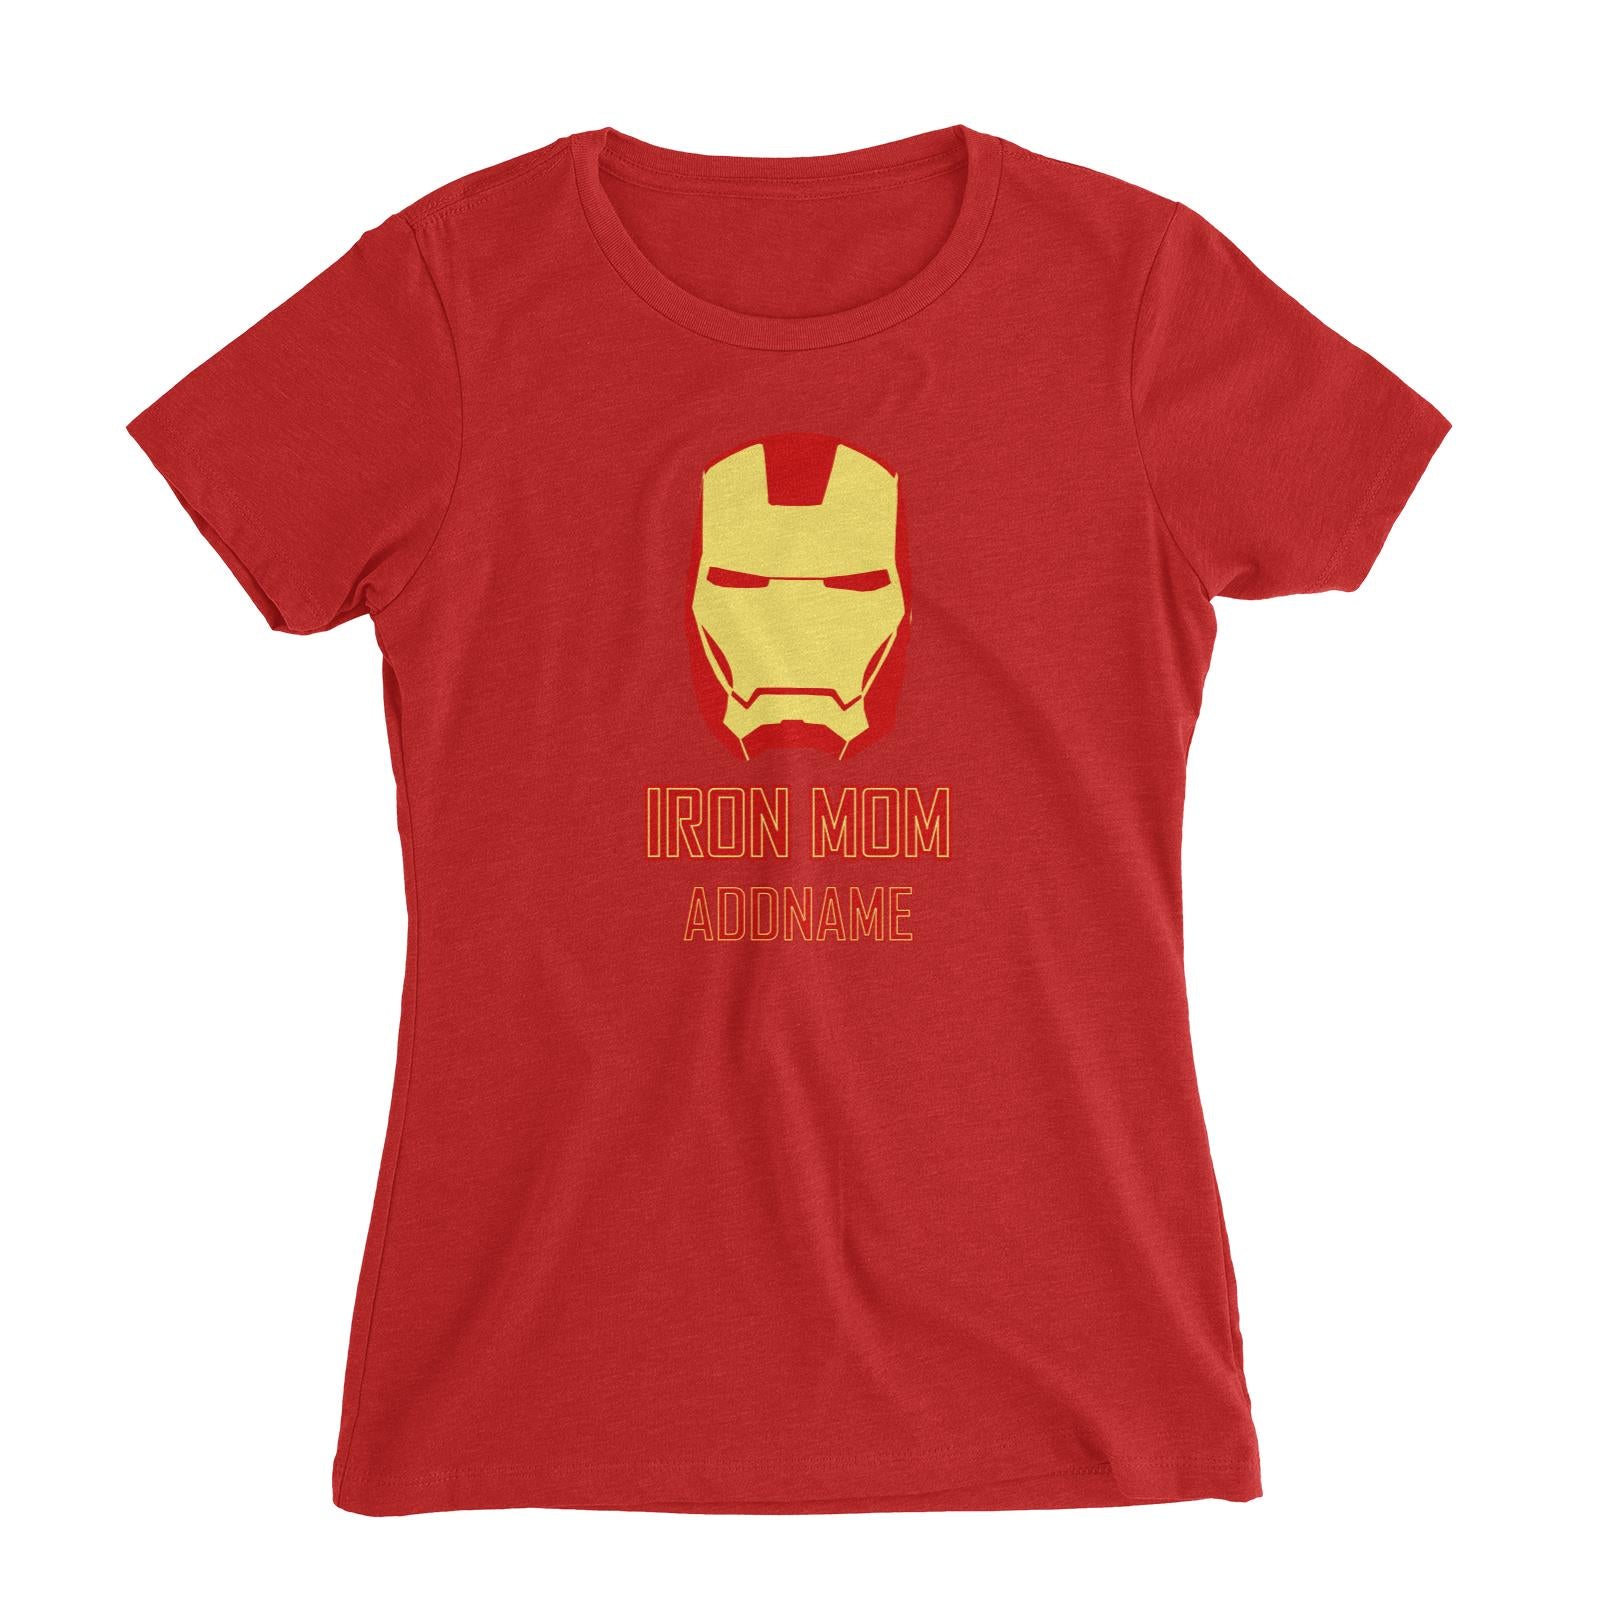 Superhero Iron Mom Addname Women's Slim Fit T-Shirt  Matching Family Personalizable Designs